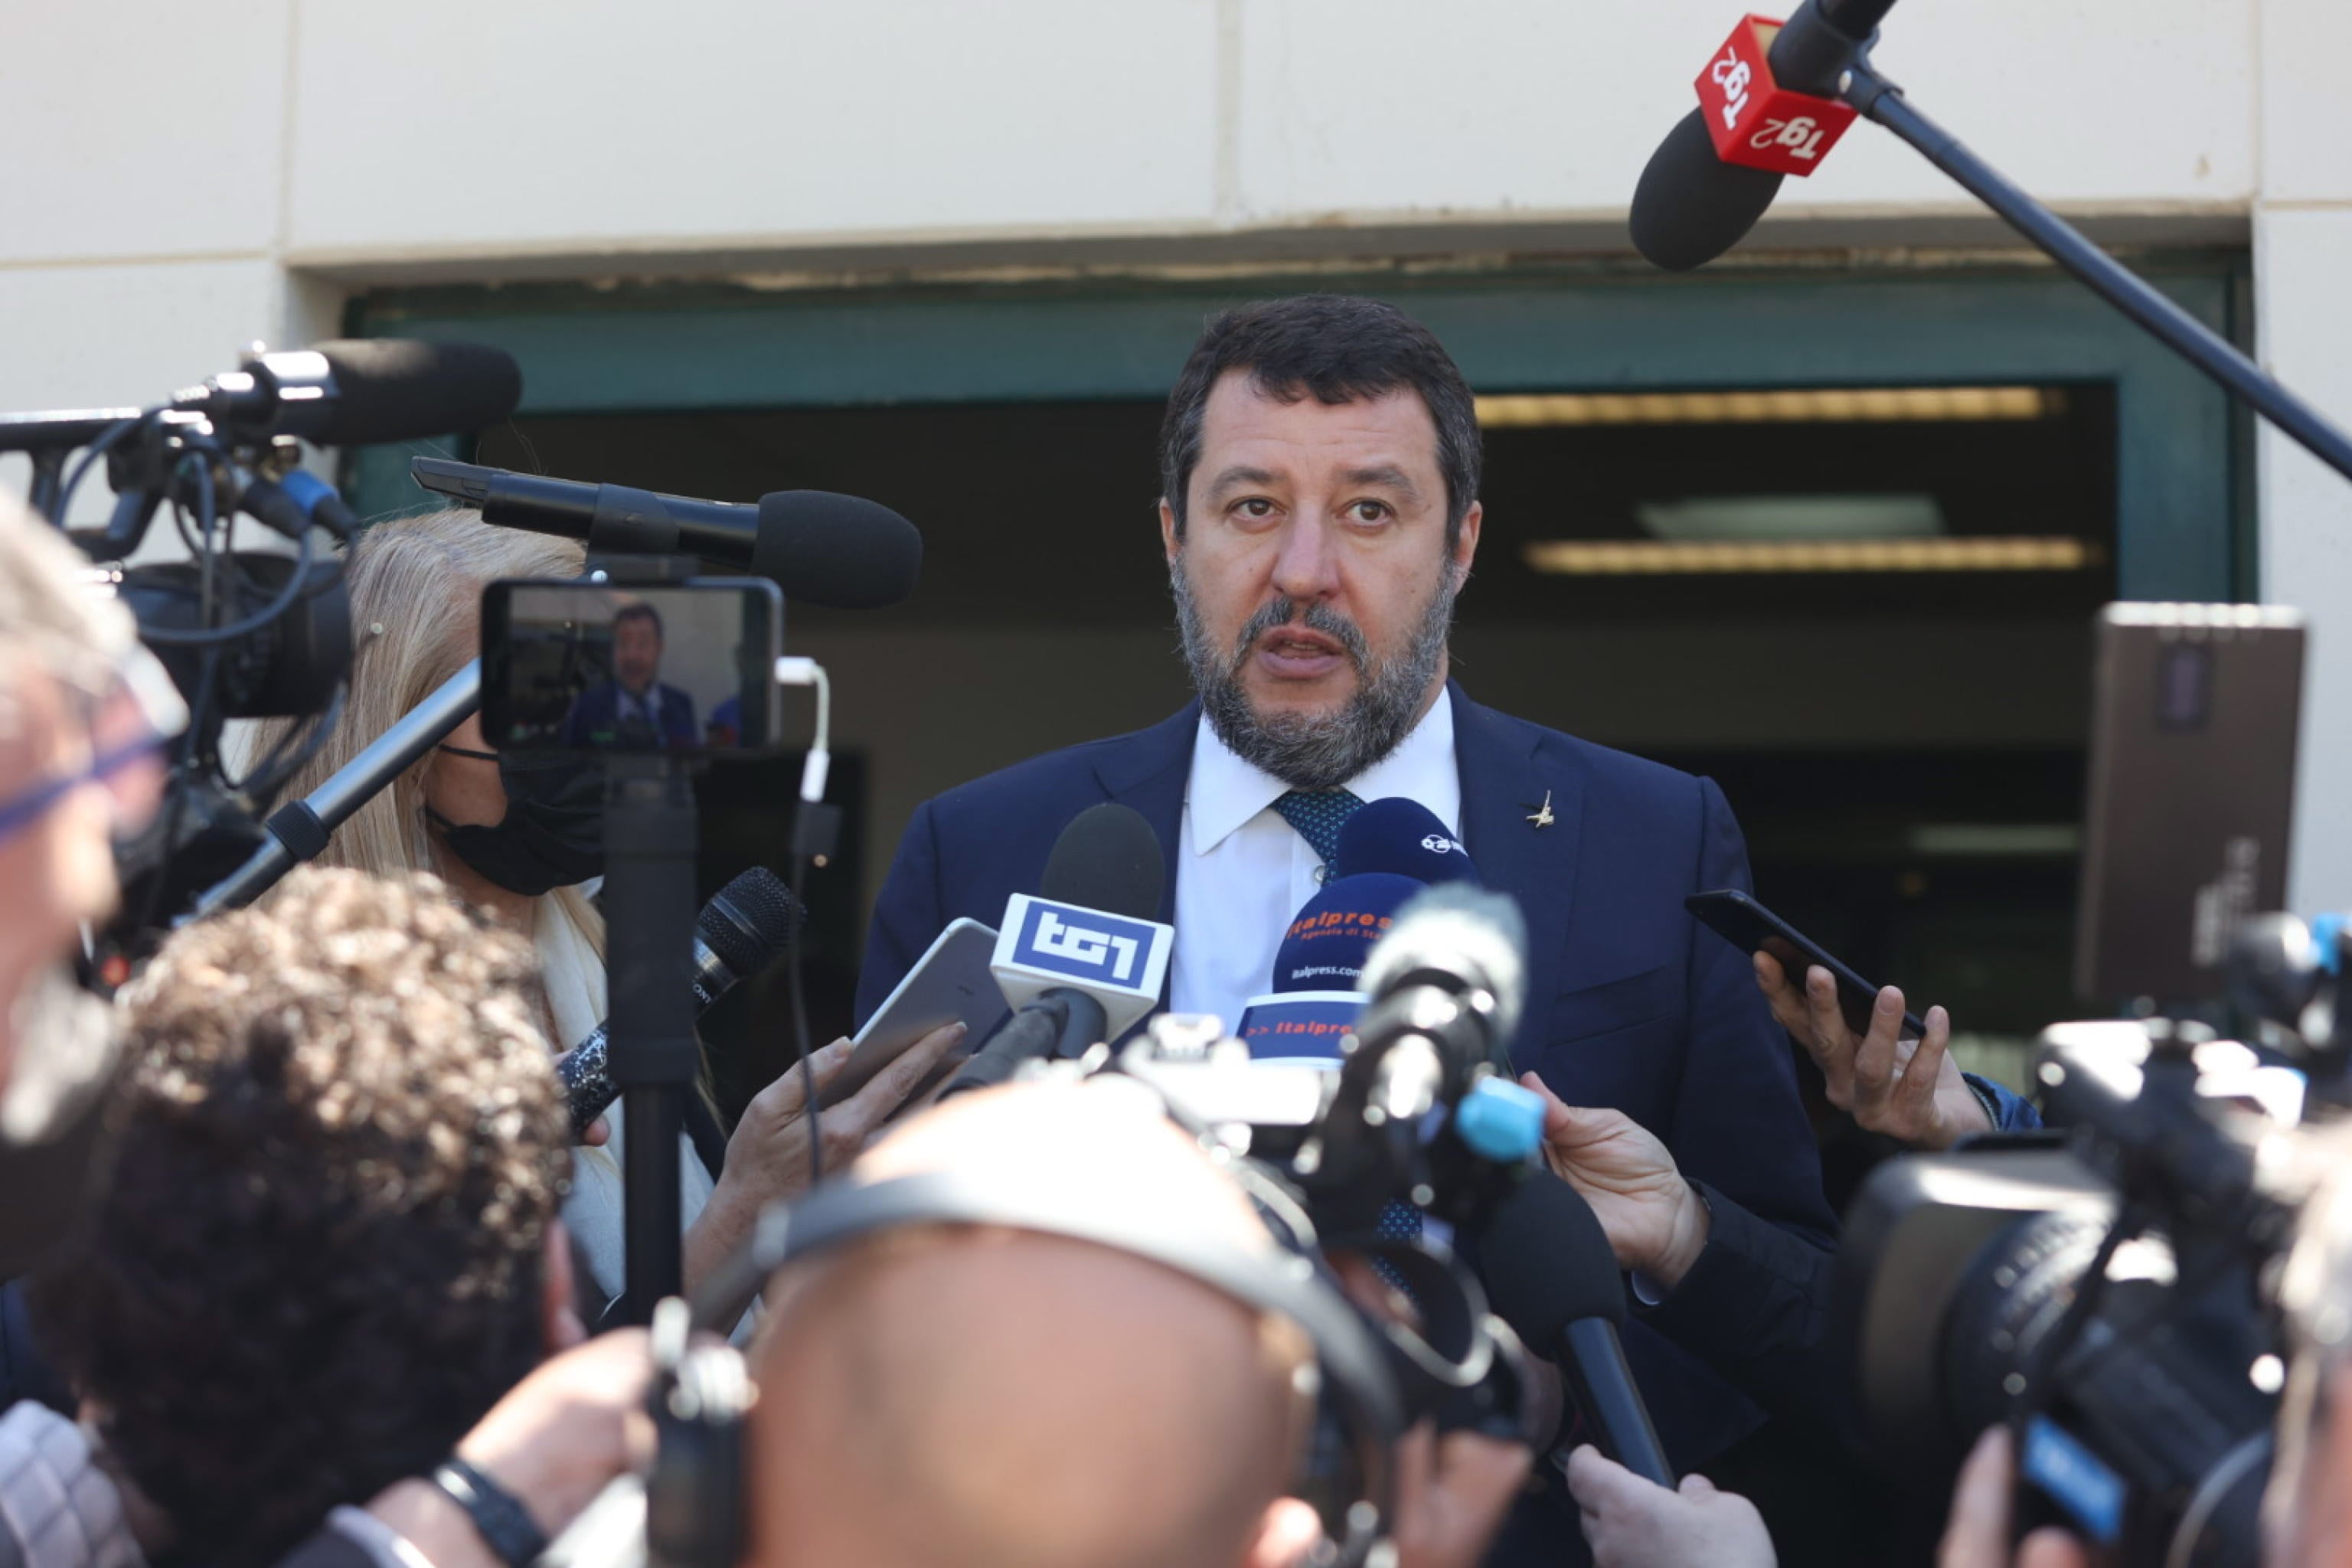 Italy's Lega Nord party leader Matteo Salvini